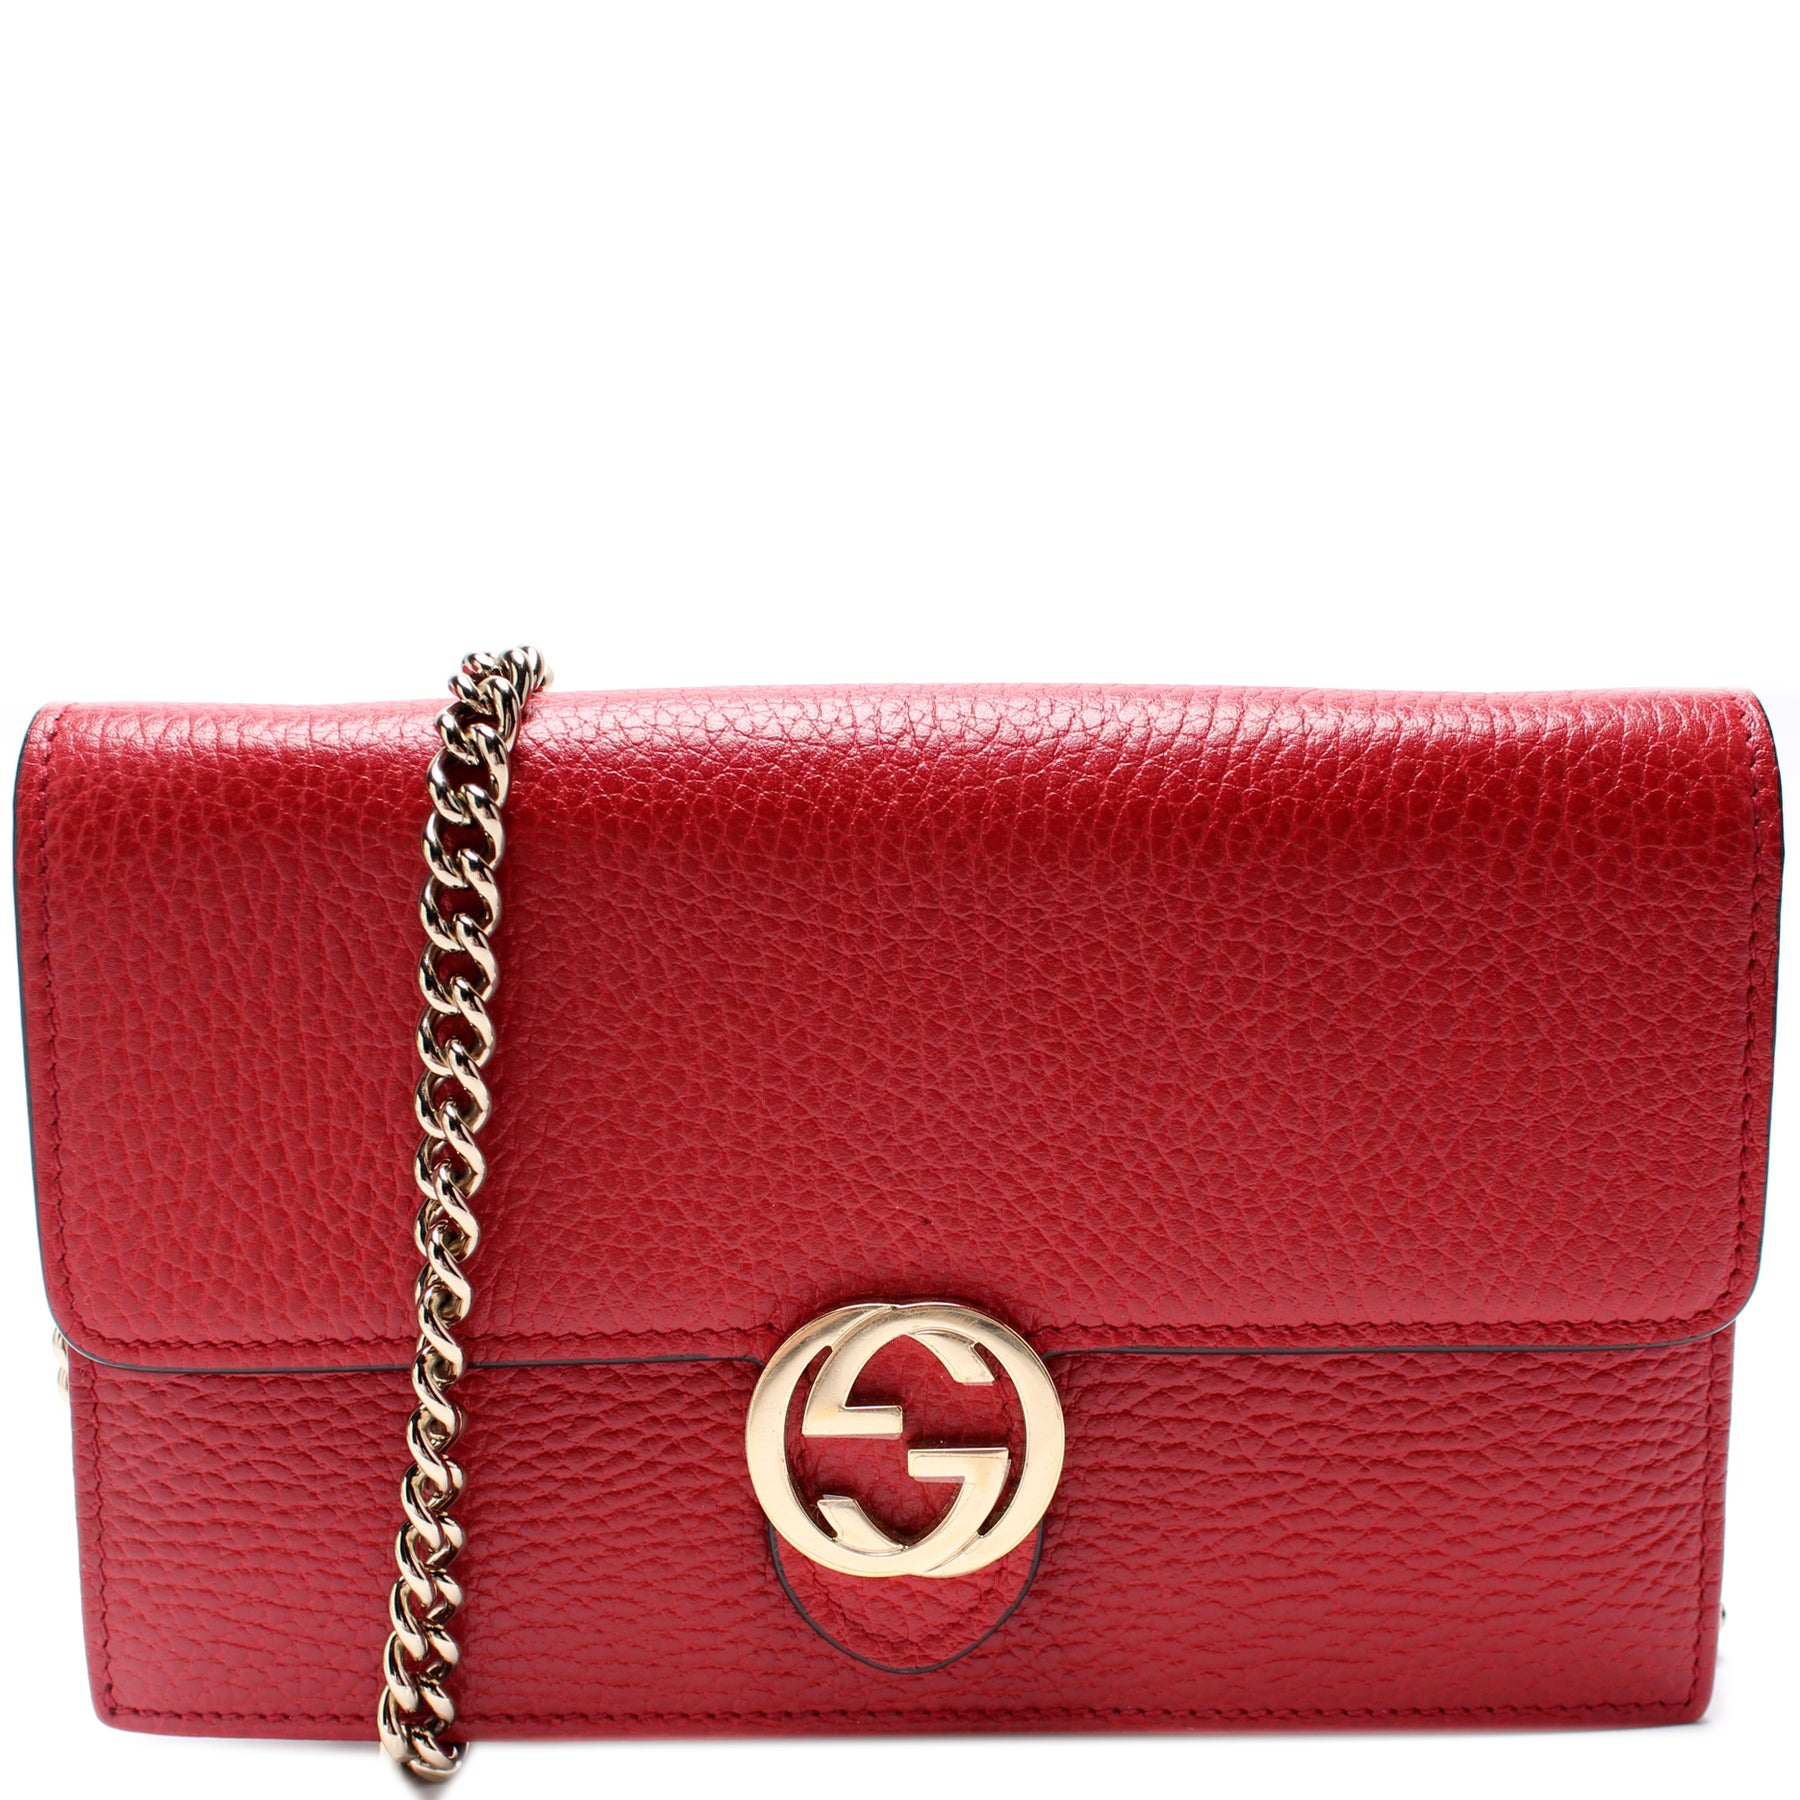 GUCCI-Interlocking-G-Leather-Chain-Shoulder-Bag-Wallet-615523